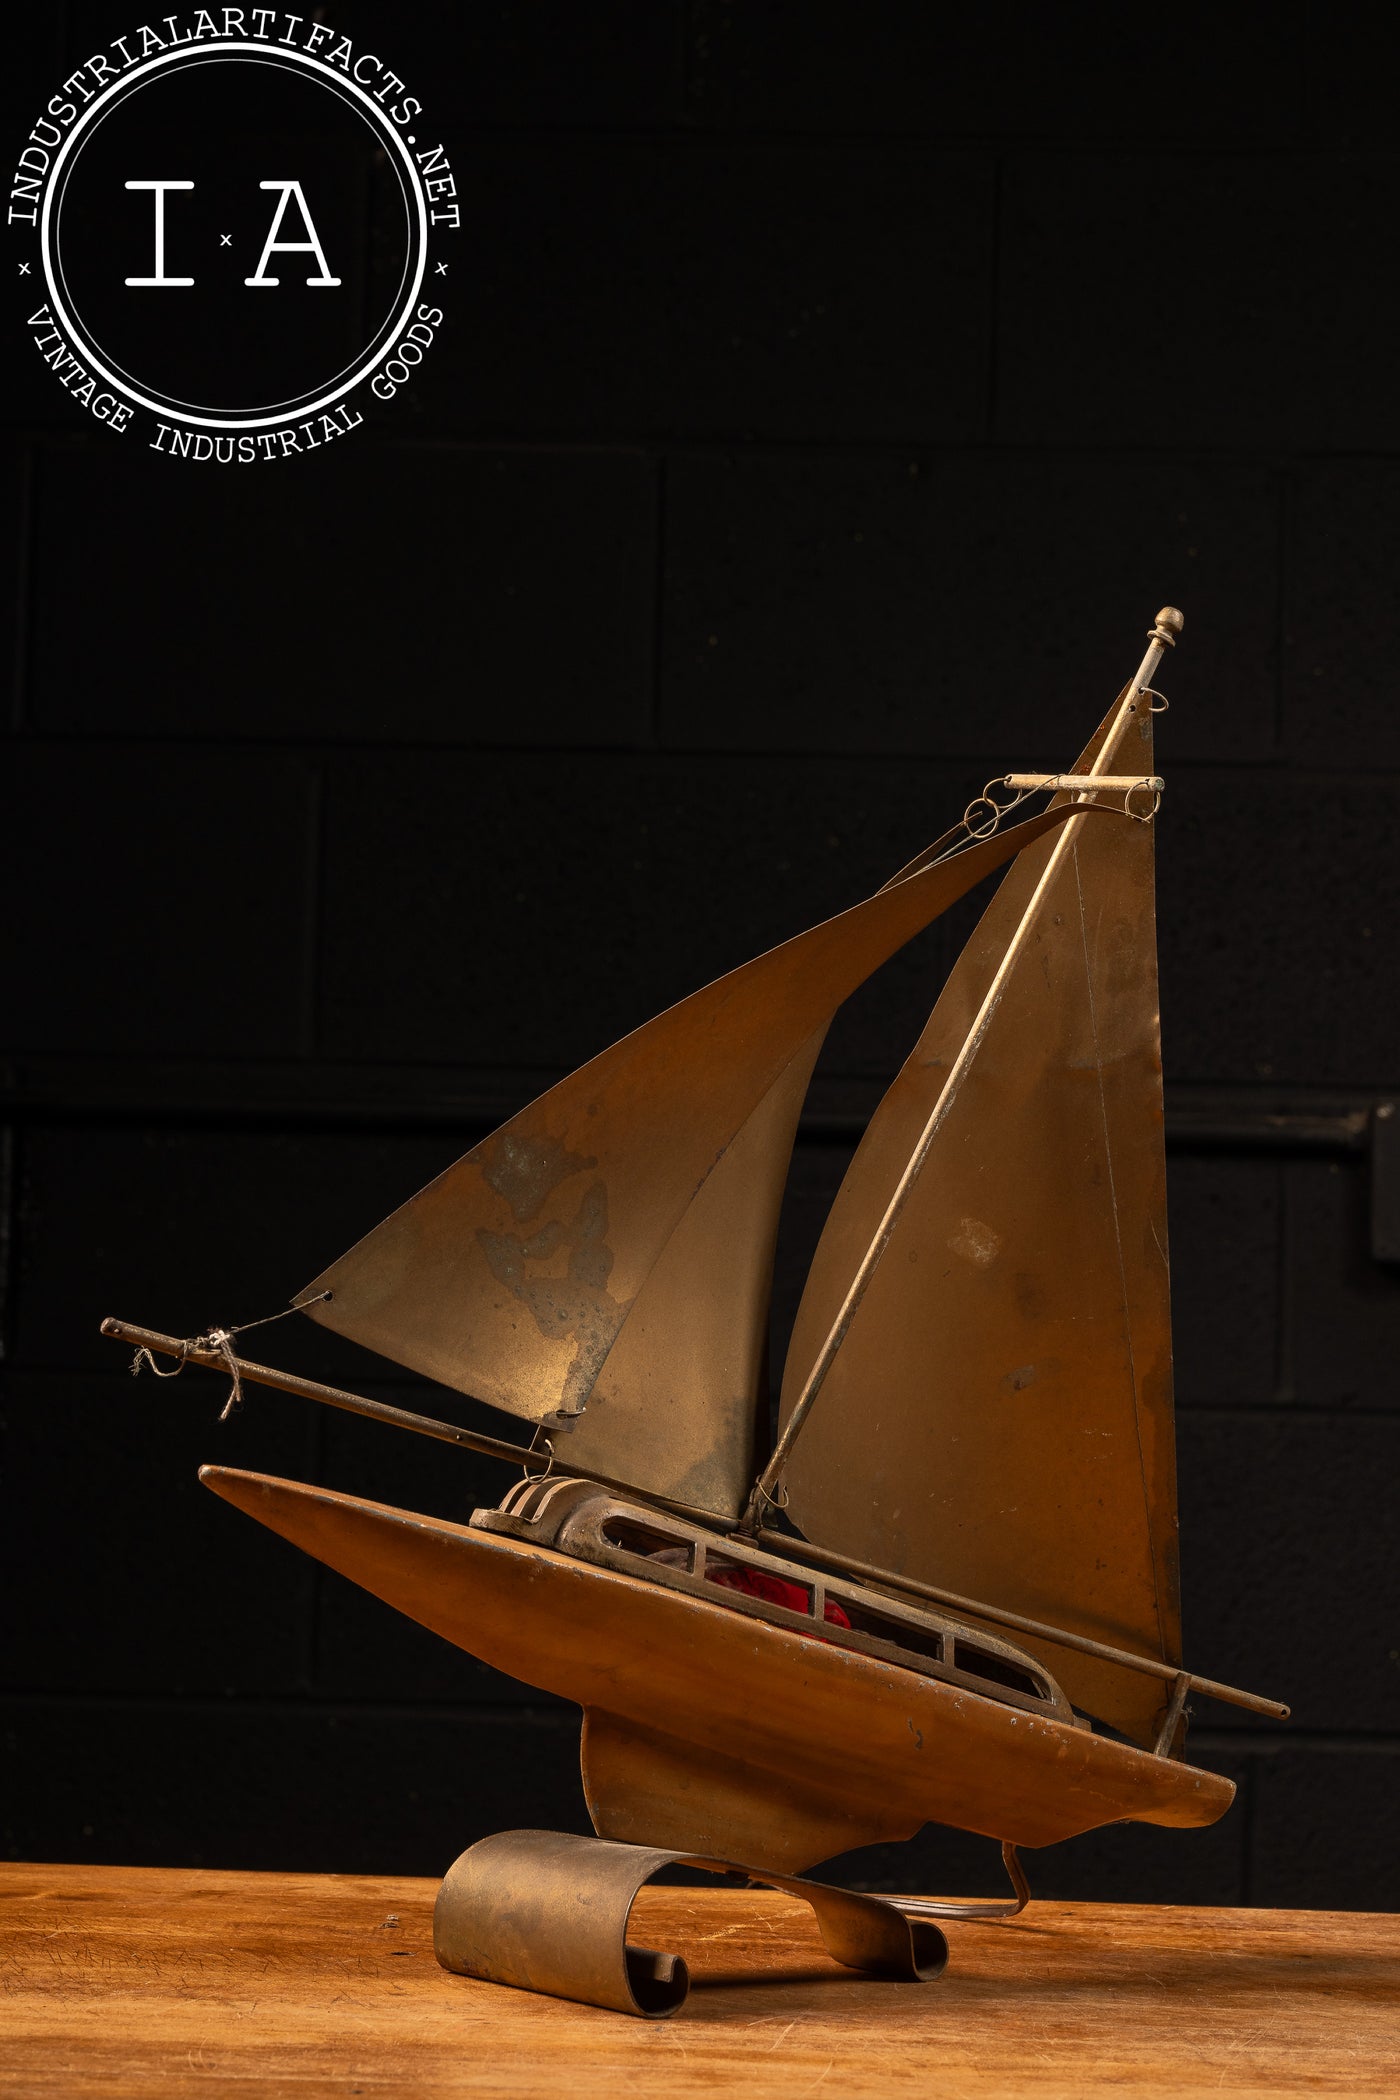 Vintage Sailboat Accent Lamp